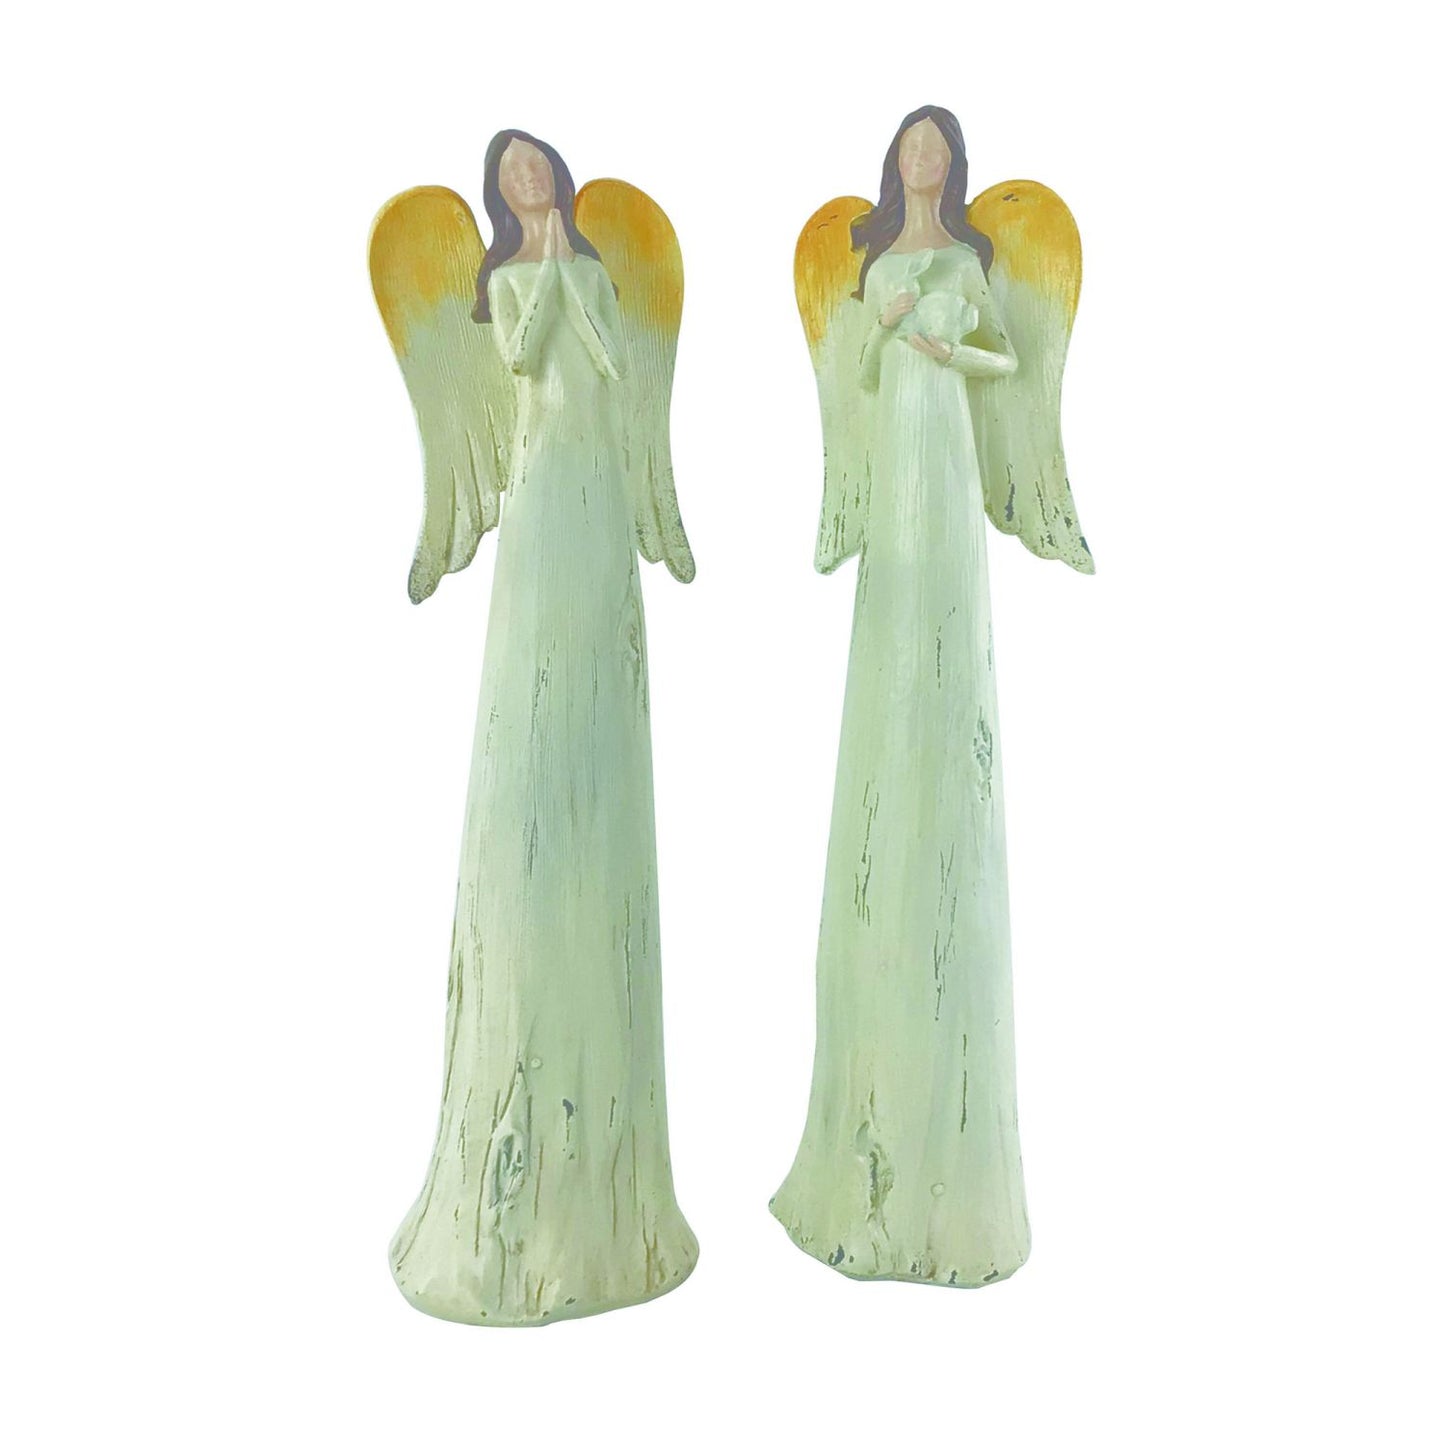 Transpac Resin Tall Praying Angel Figurine, Set Of 2, Assortment